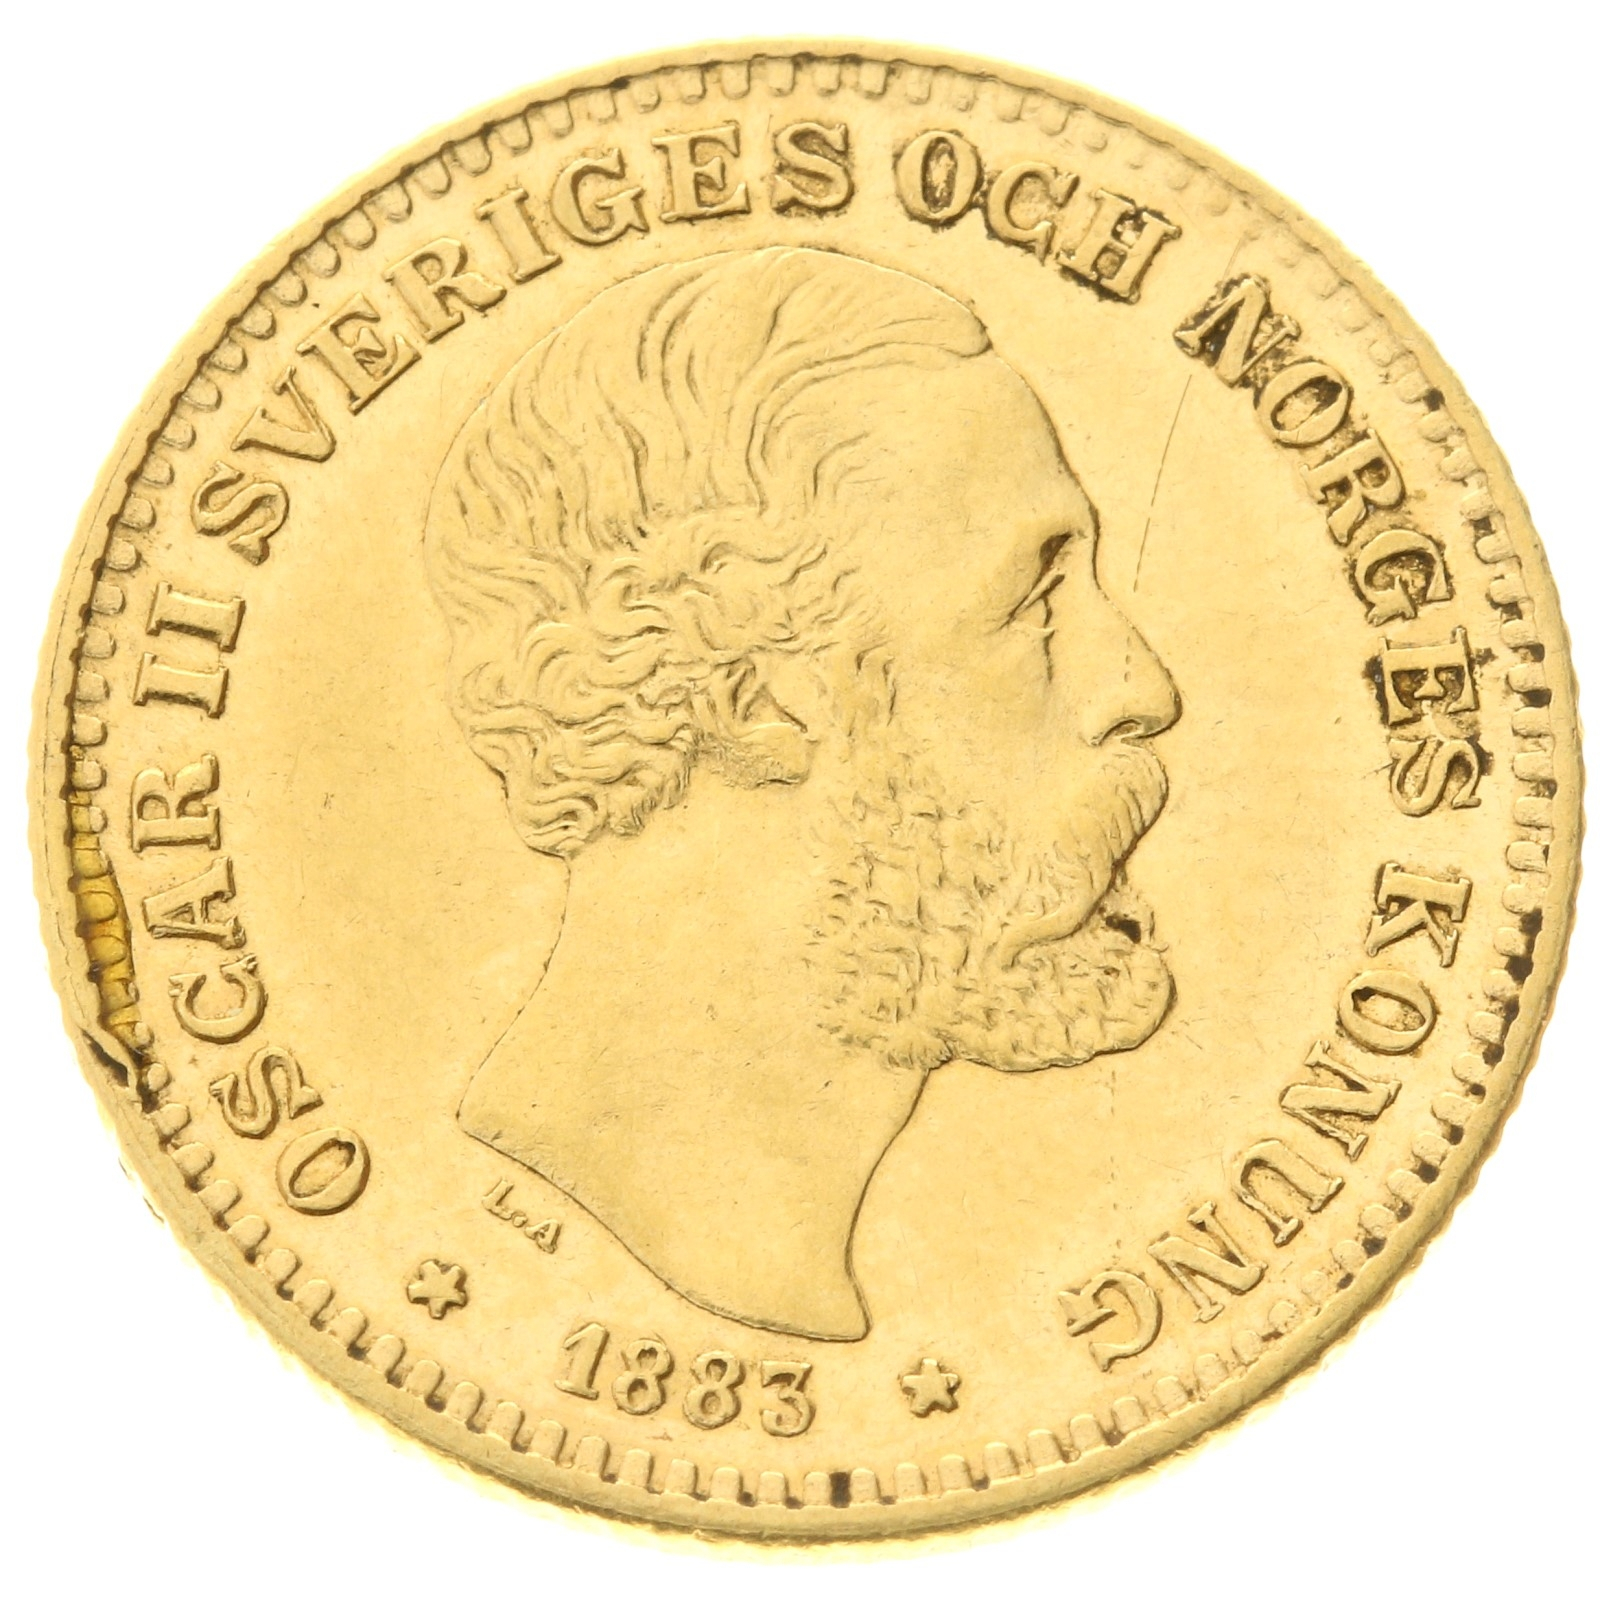 Sweden - 10 kronor - 1883 - Oscar II 